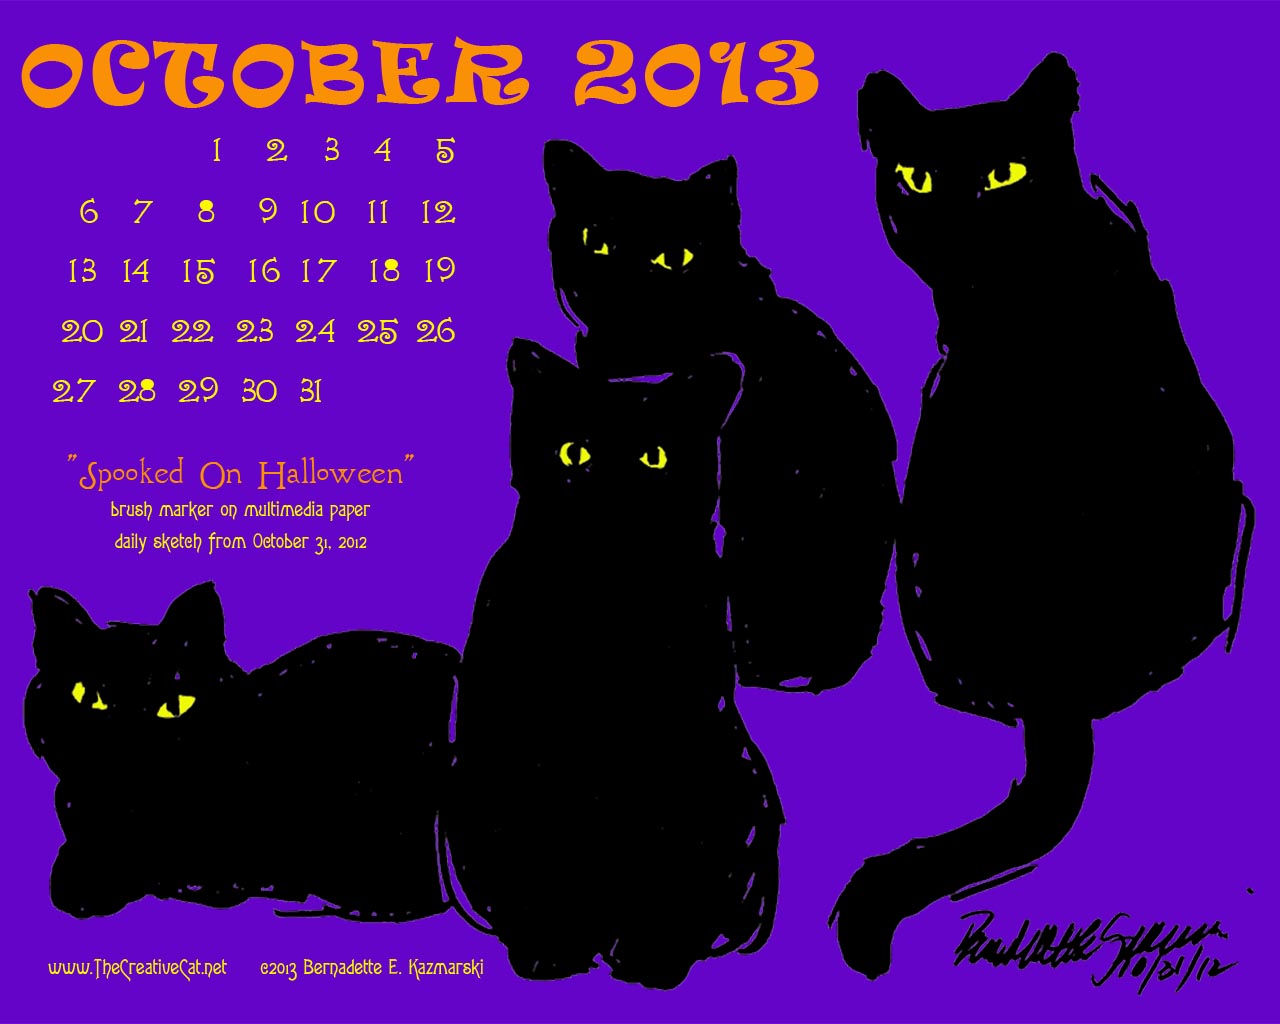 "Spooked on Halloween" desktop calendar for square monitors.